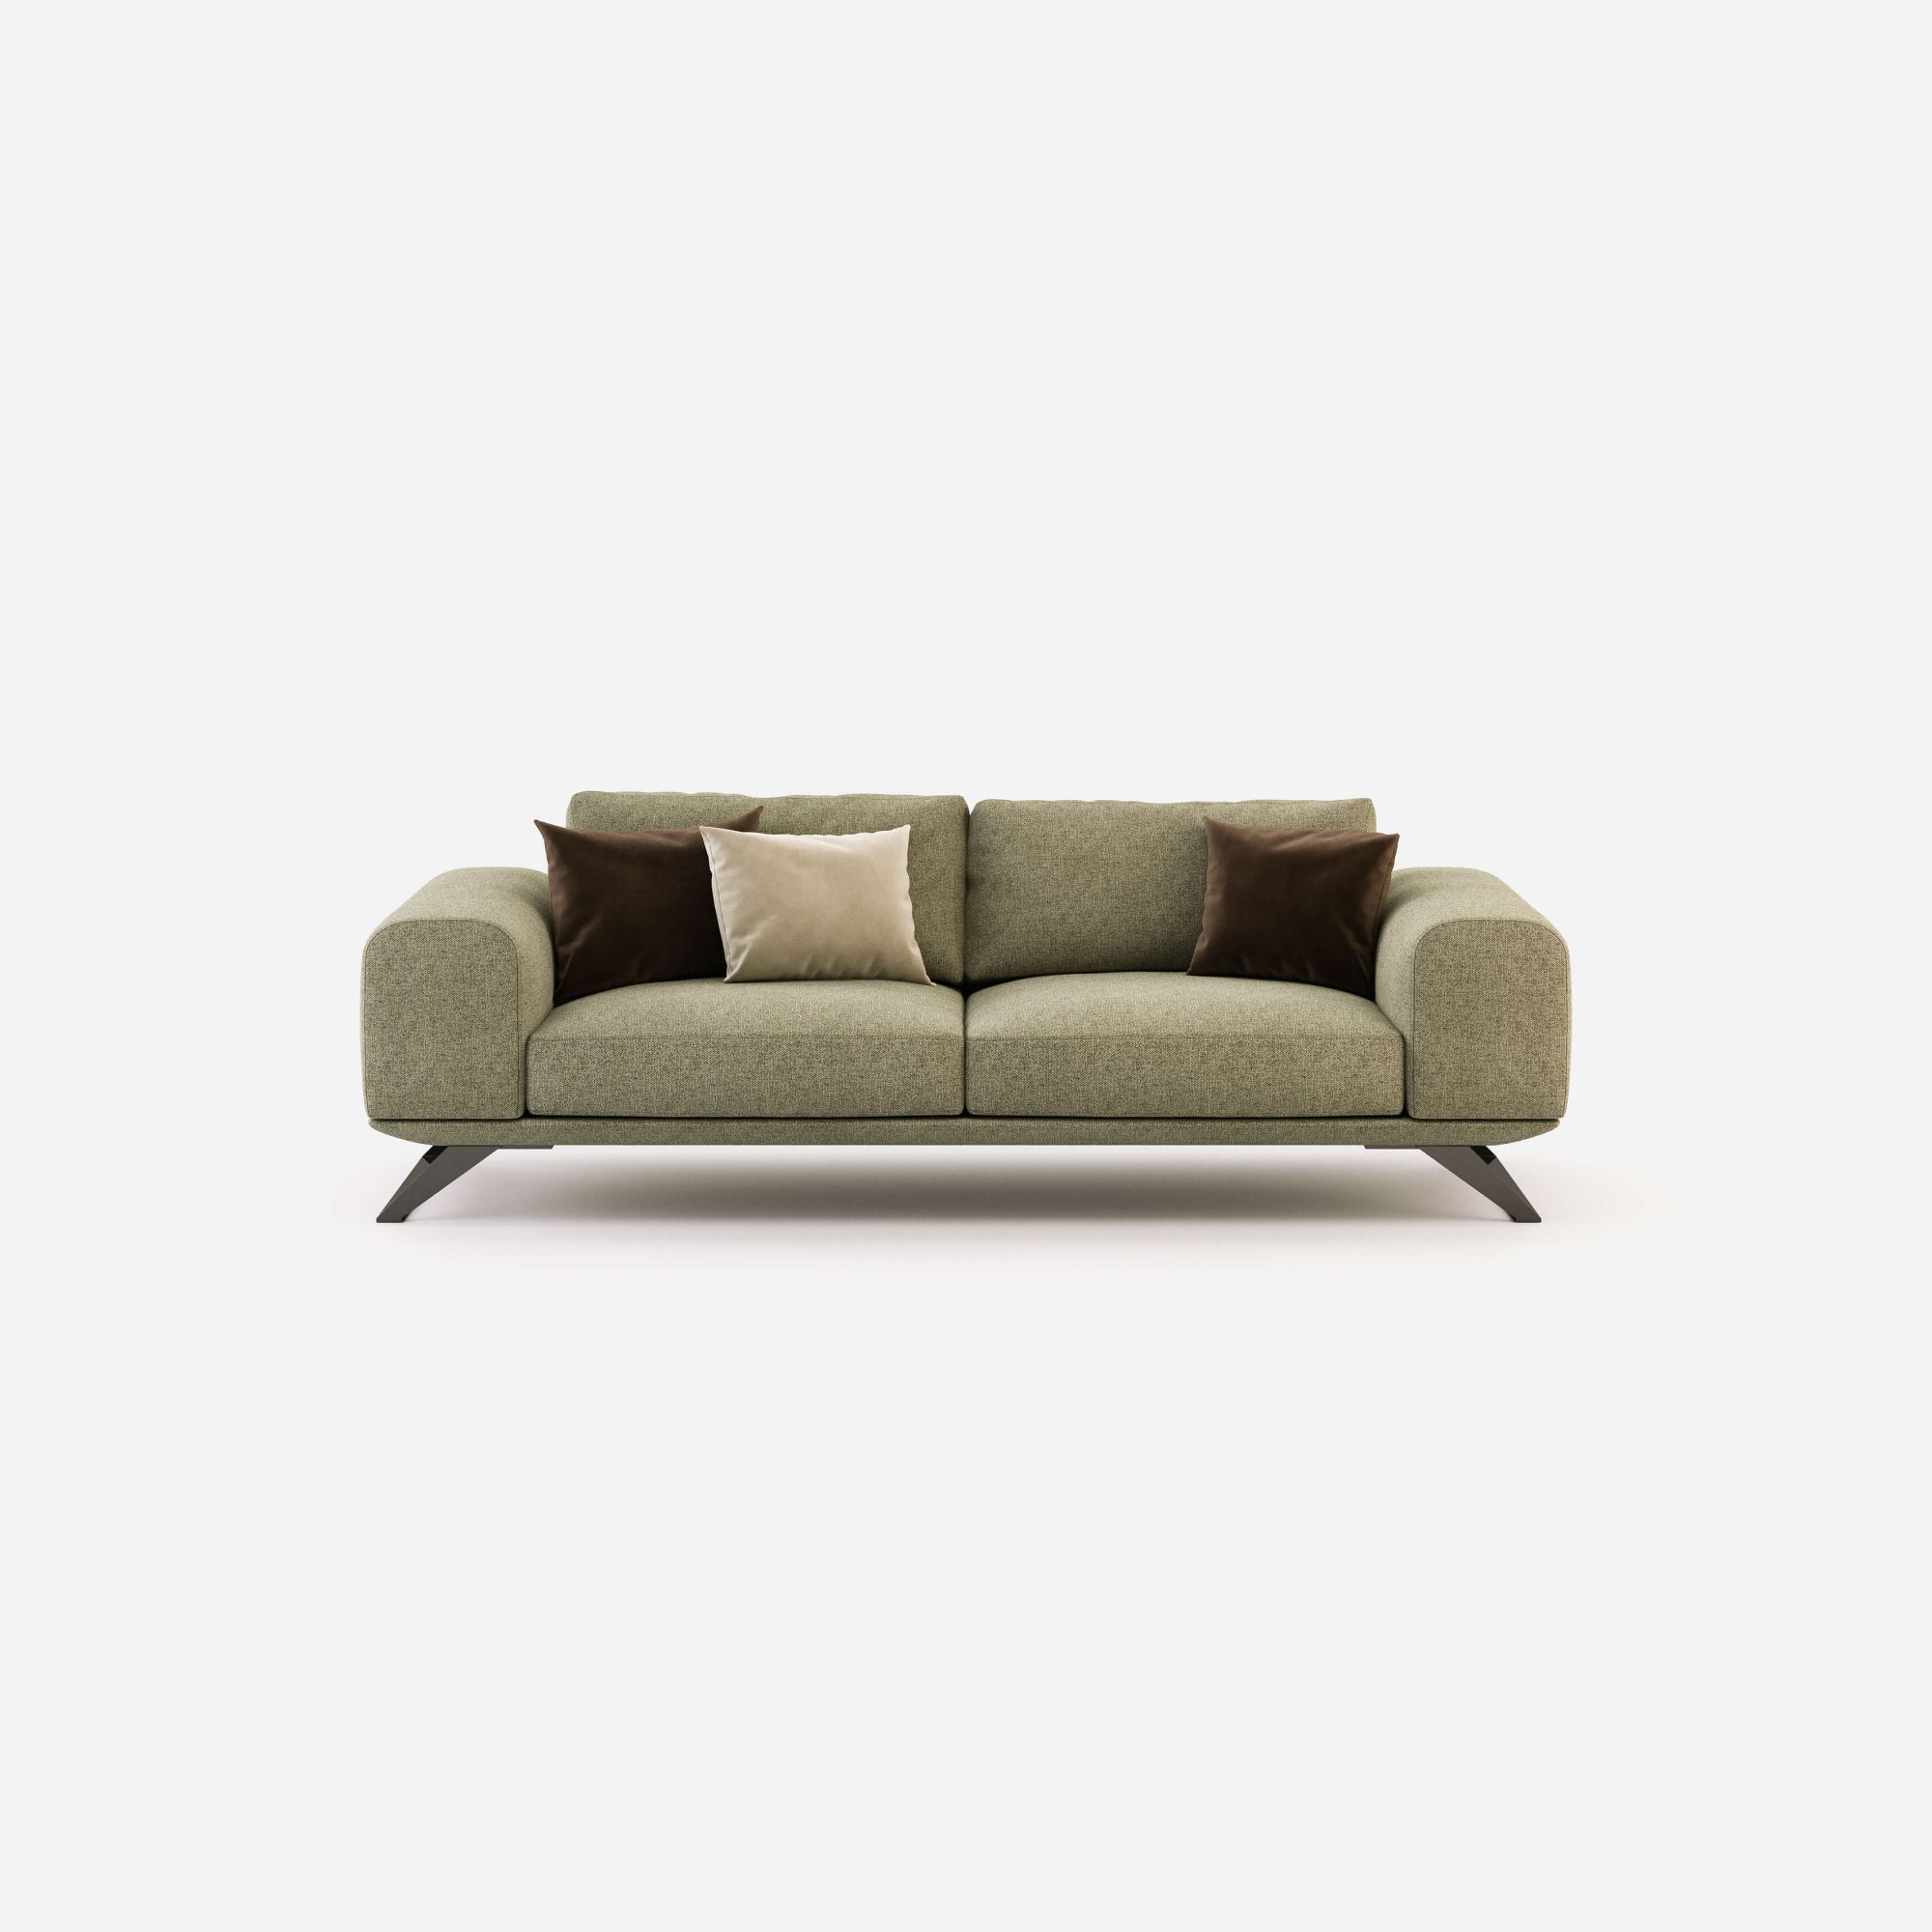 Aniston Sofa by Domkapa | Sofas - Design Meets Comfort